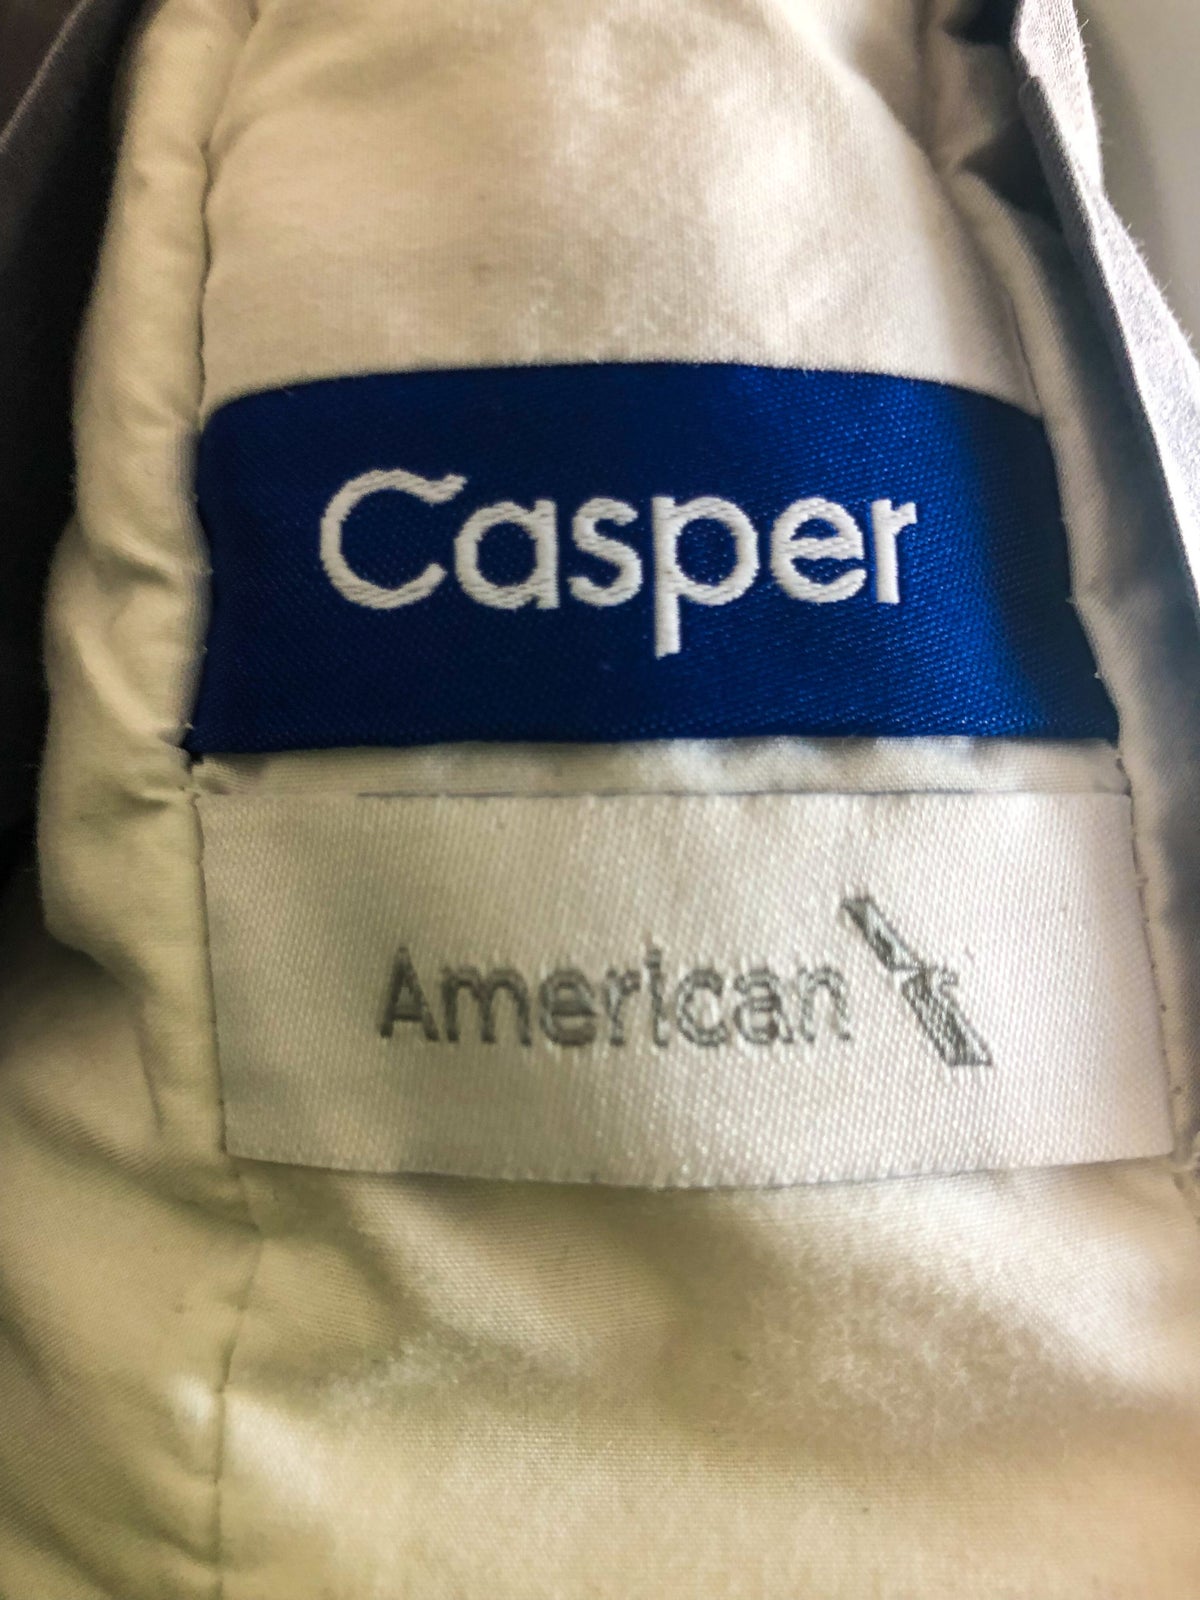 American Airlines 787-9 Flagship Business Class Casper logo